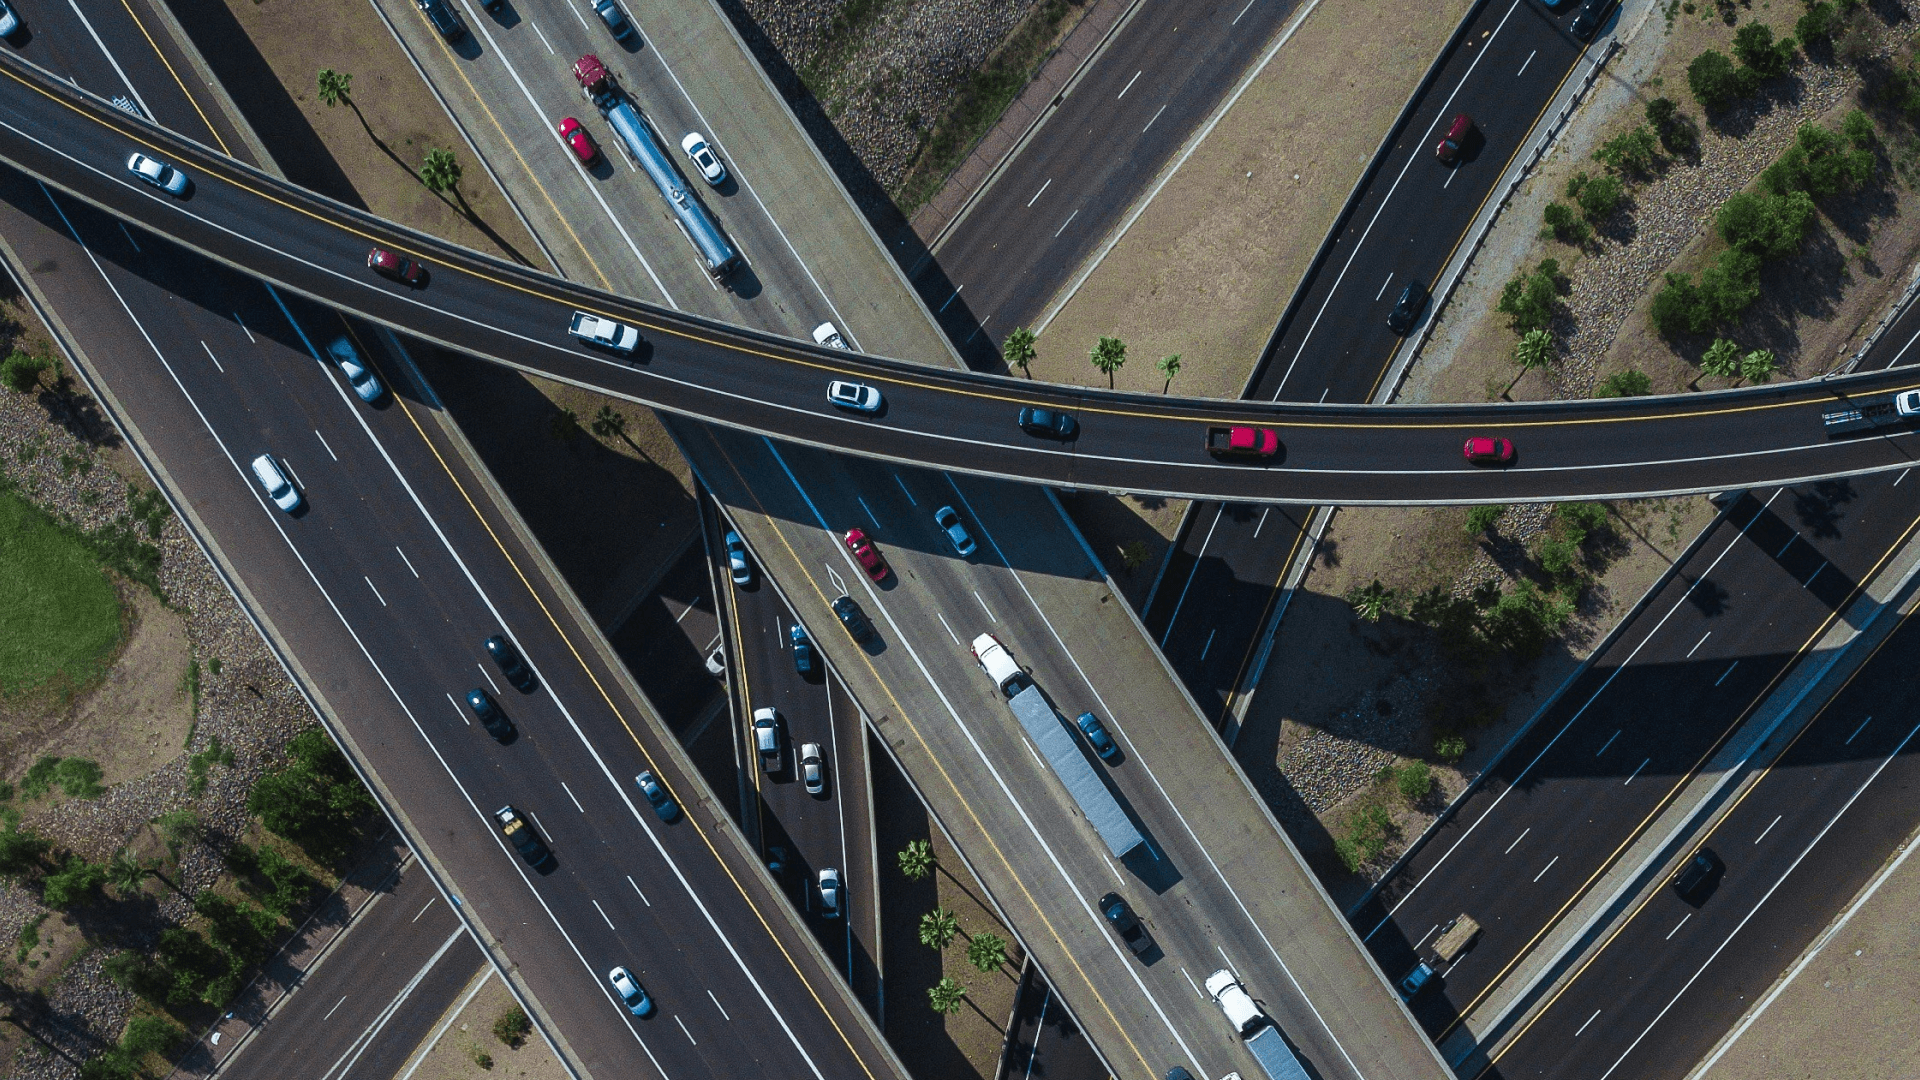 Overhead shot of a highway crossing